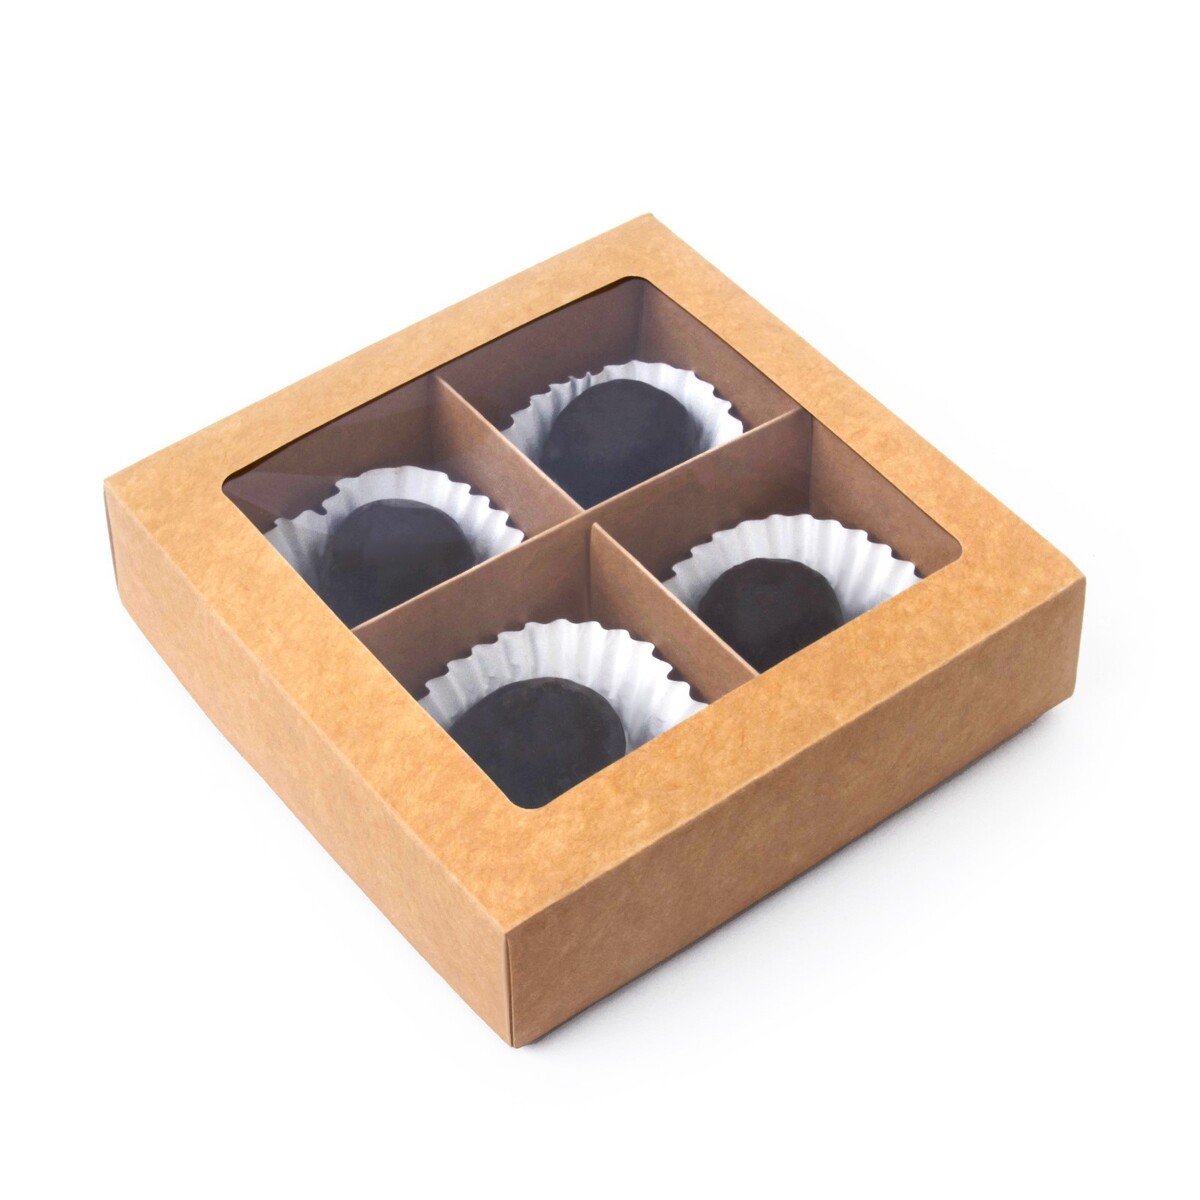 Коробка складная под 4 конфеты с окном, крафт, 12.6 х 12.6 х 3.5 см коробка складная под 3 конфеты крафт 5 х 13 7 х 3 5 см